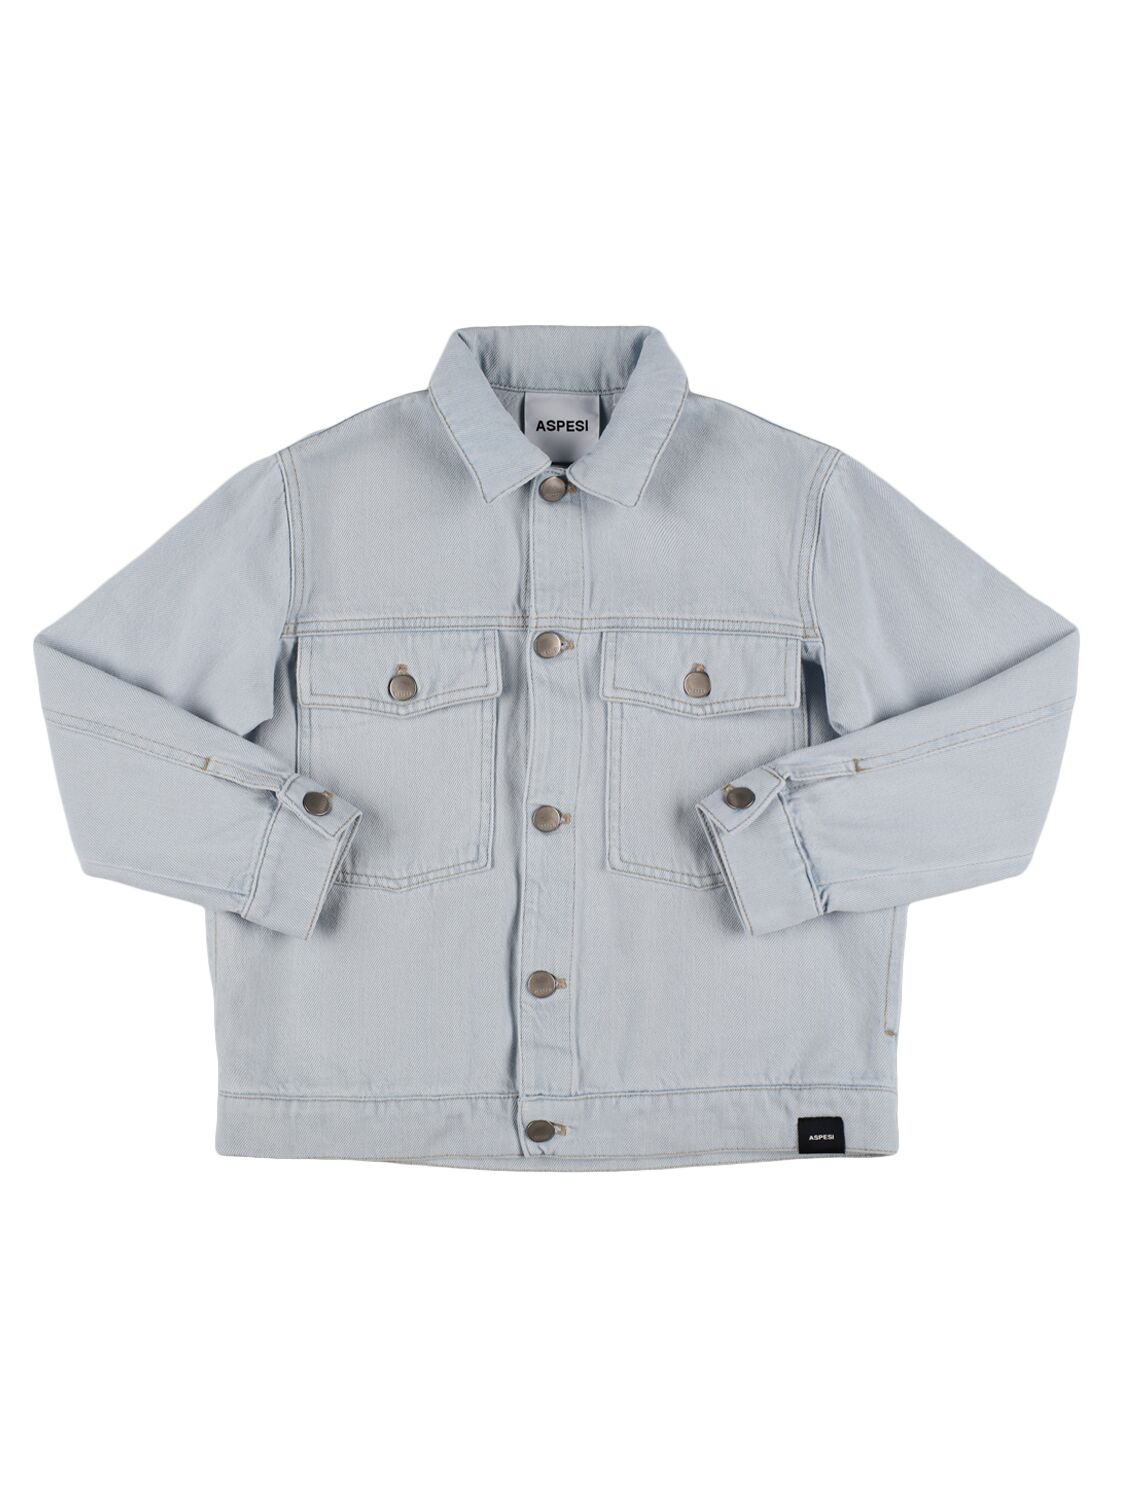 Aspesi Kids' Cotton Denim Jacket